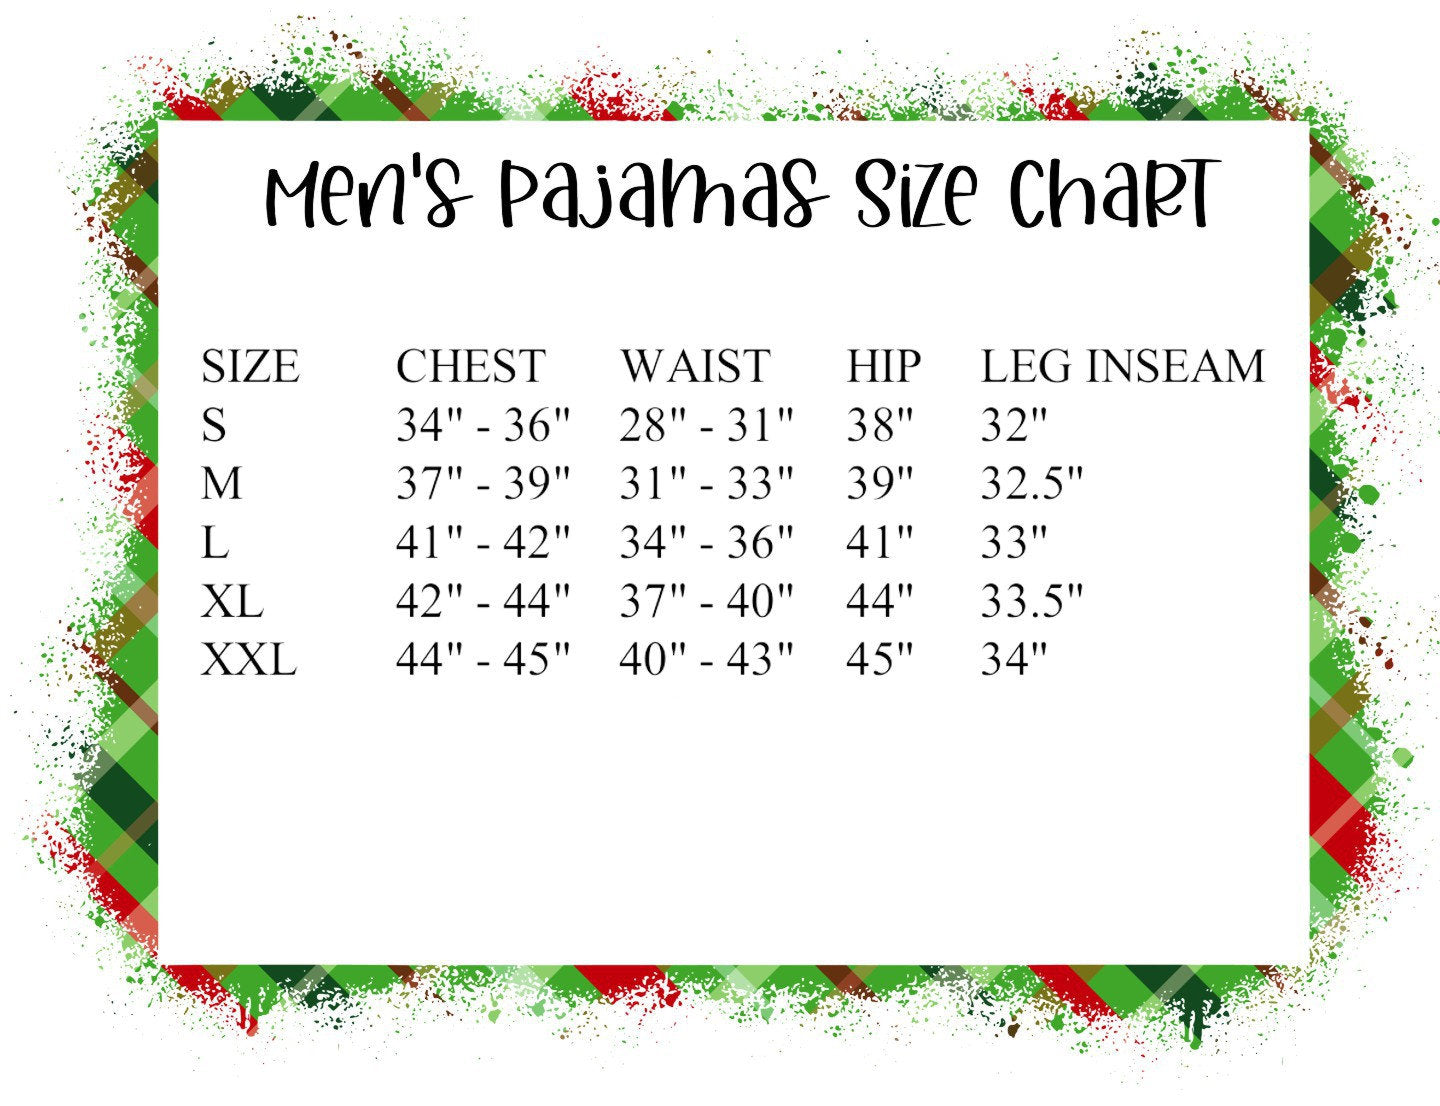 Will Trade Cousin for Presents Christmas Pajamas - matching christmas pjs -  women's christmas jammies - matching family christmas pajamas